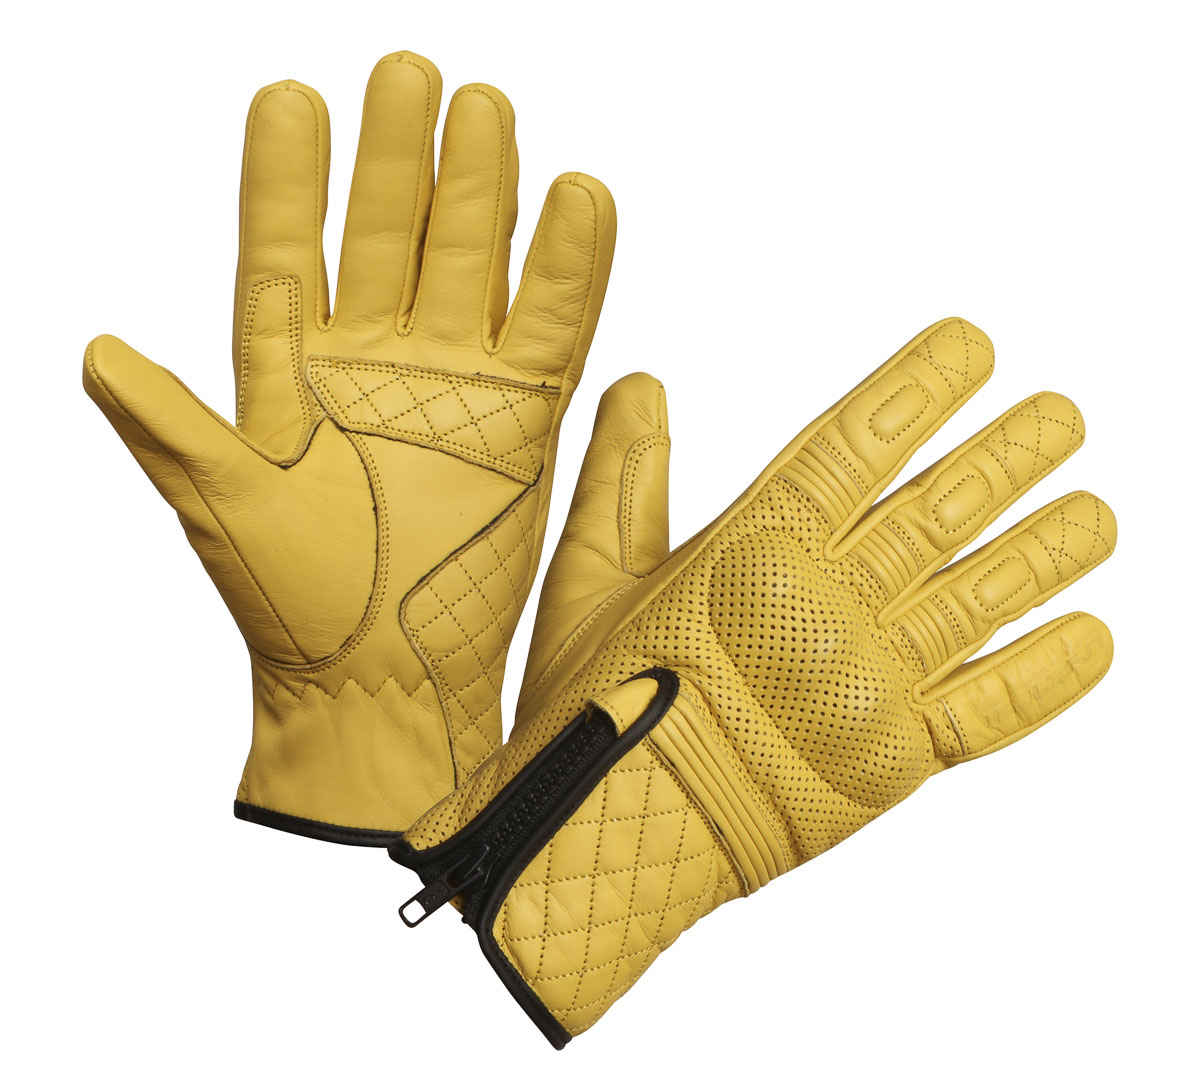 Buy online Hand Design Wool Gloves from Winterwear for Men by Neska Moda  for ₹350 at 42% off